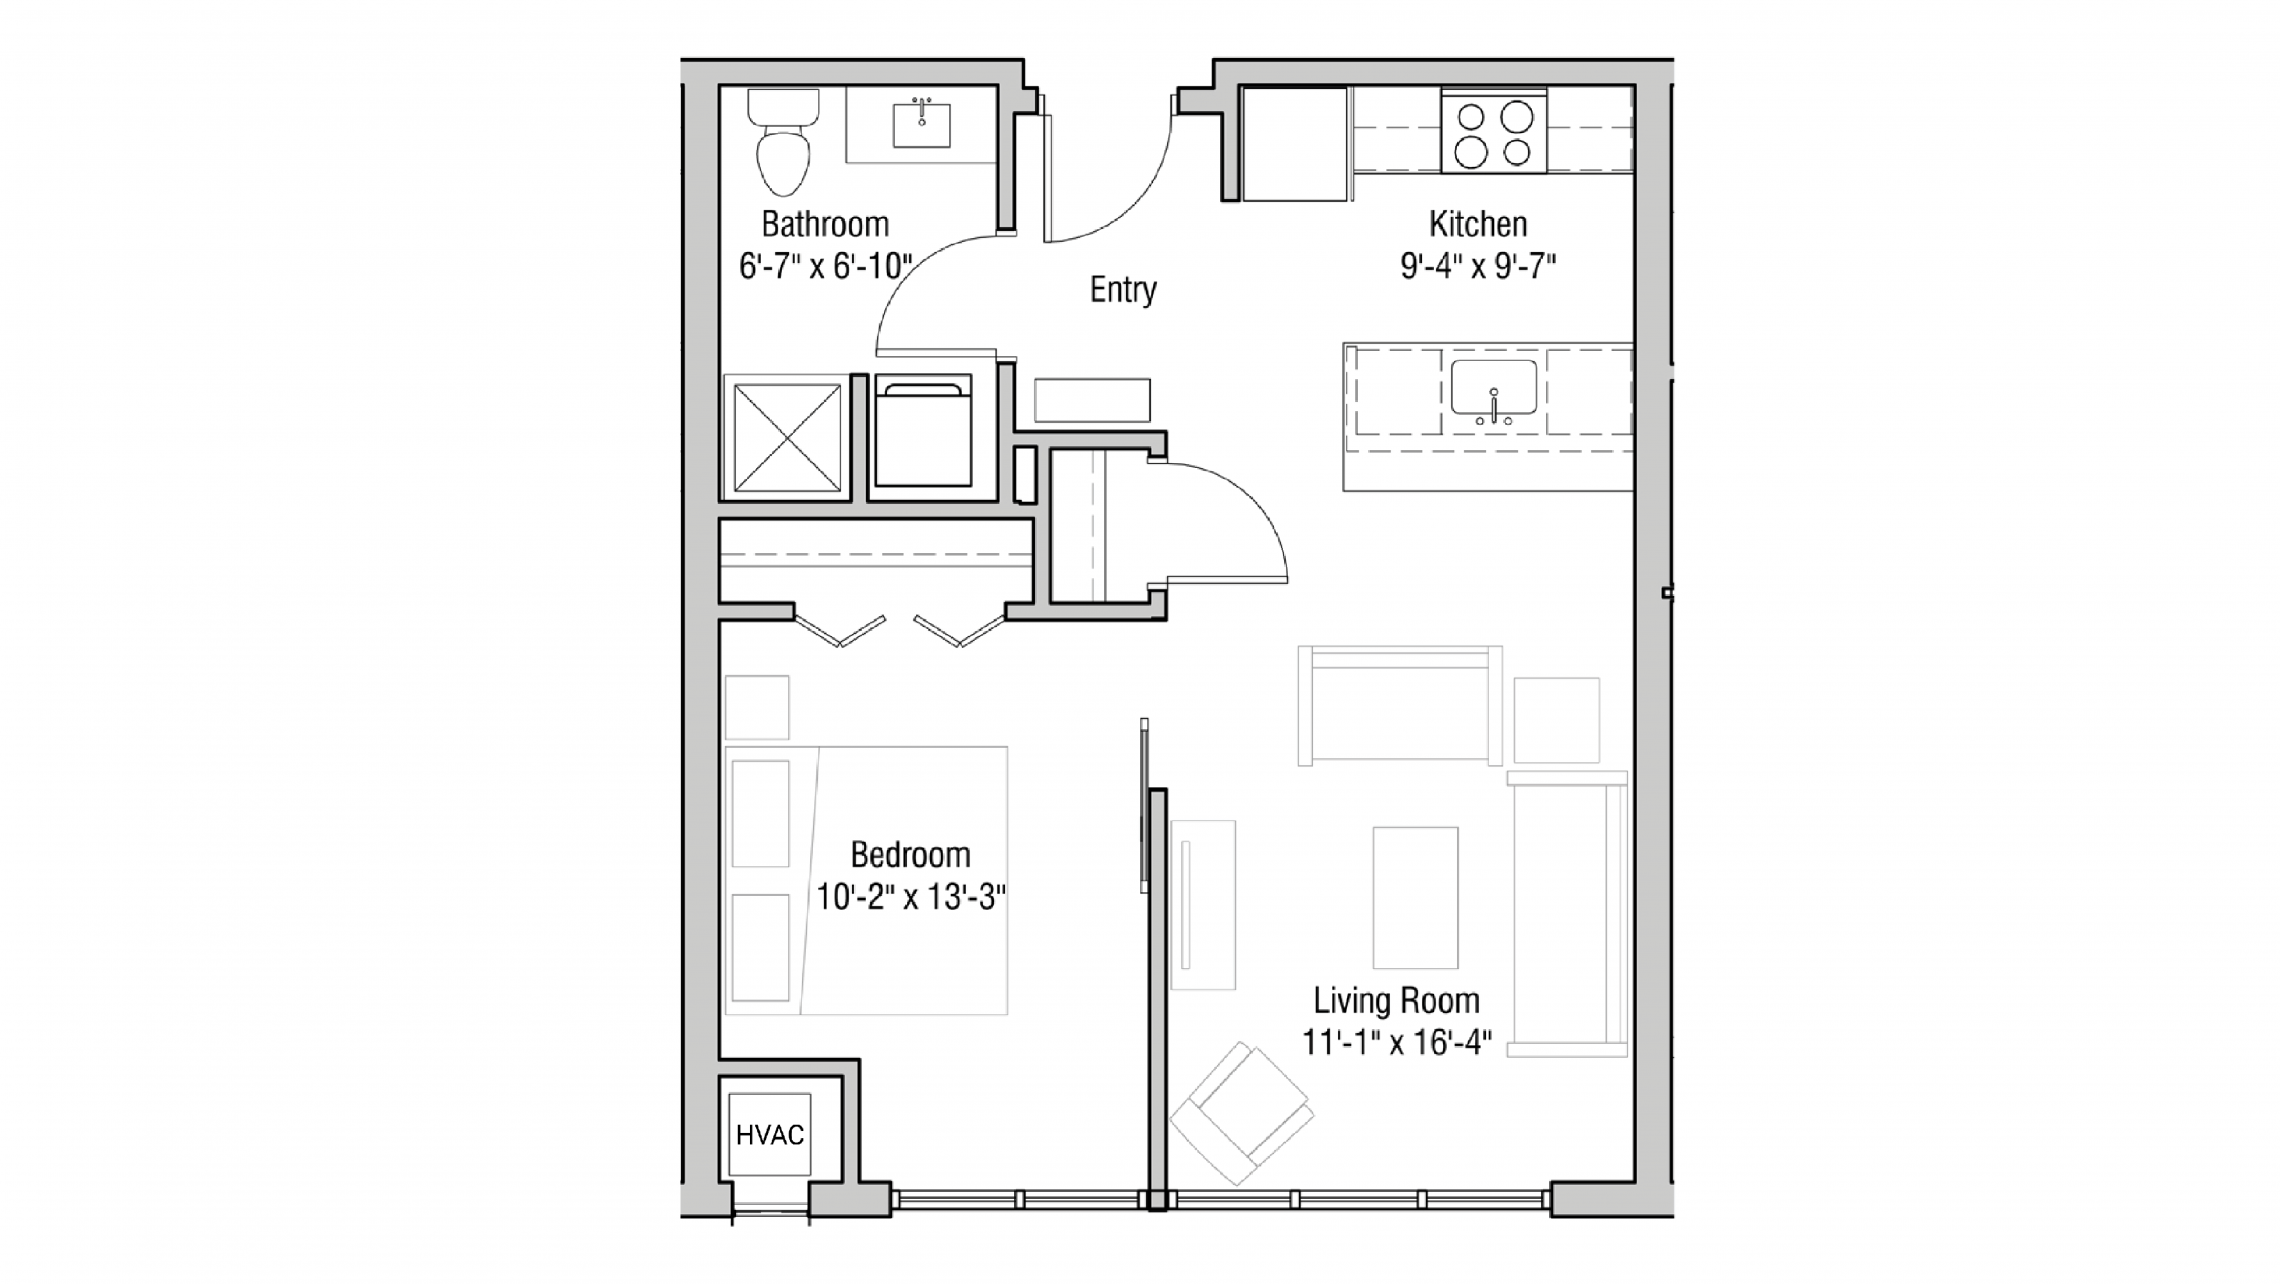 ULI Quarter Row 208 - One Bedroom, One Bathroom